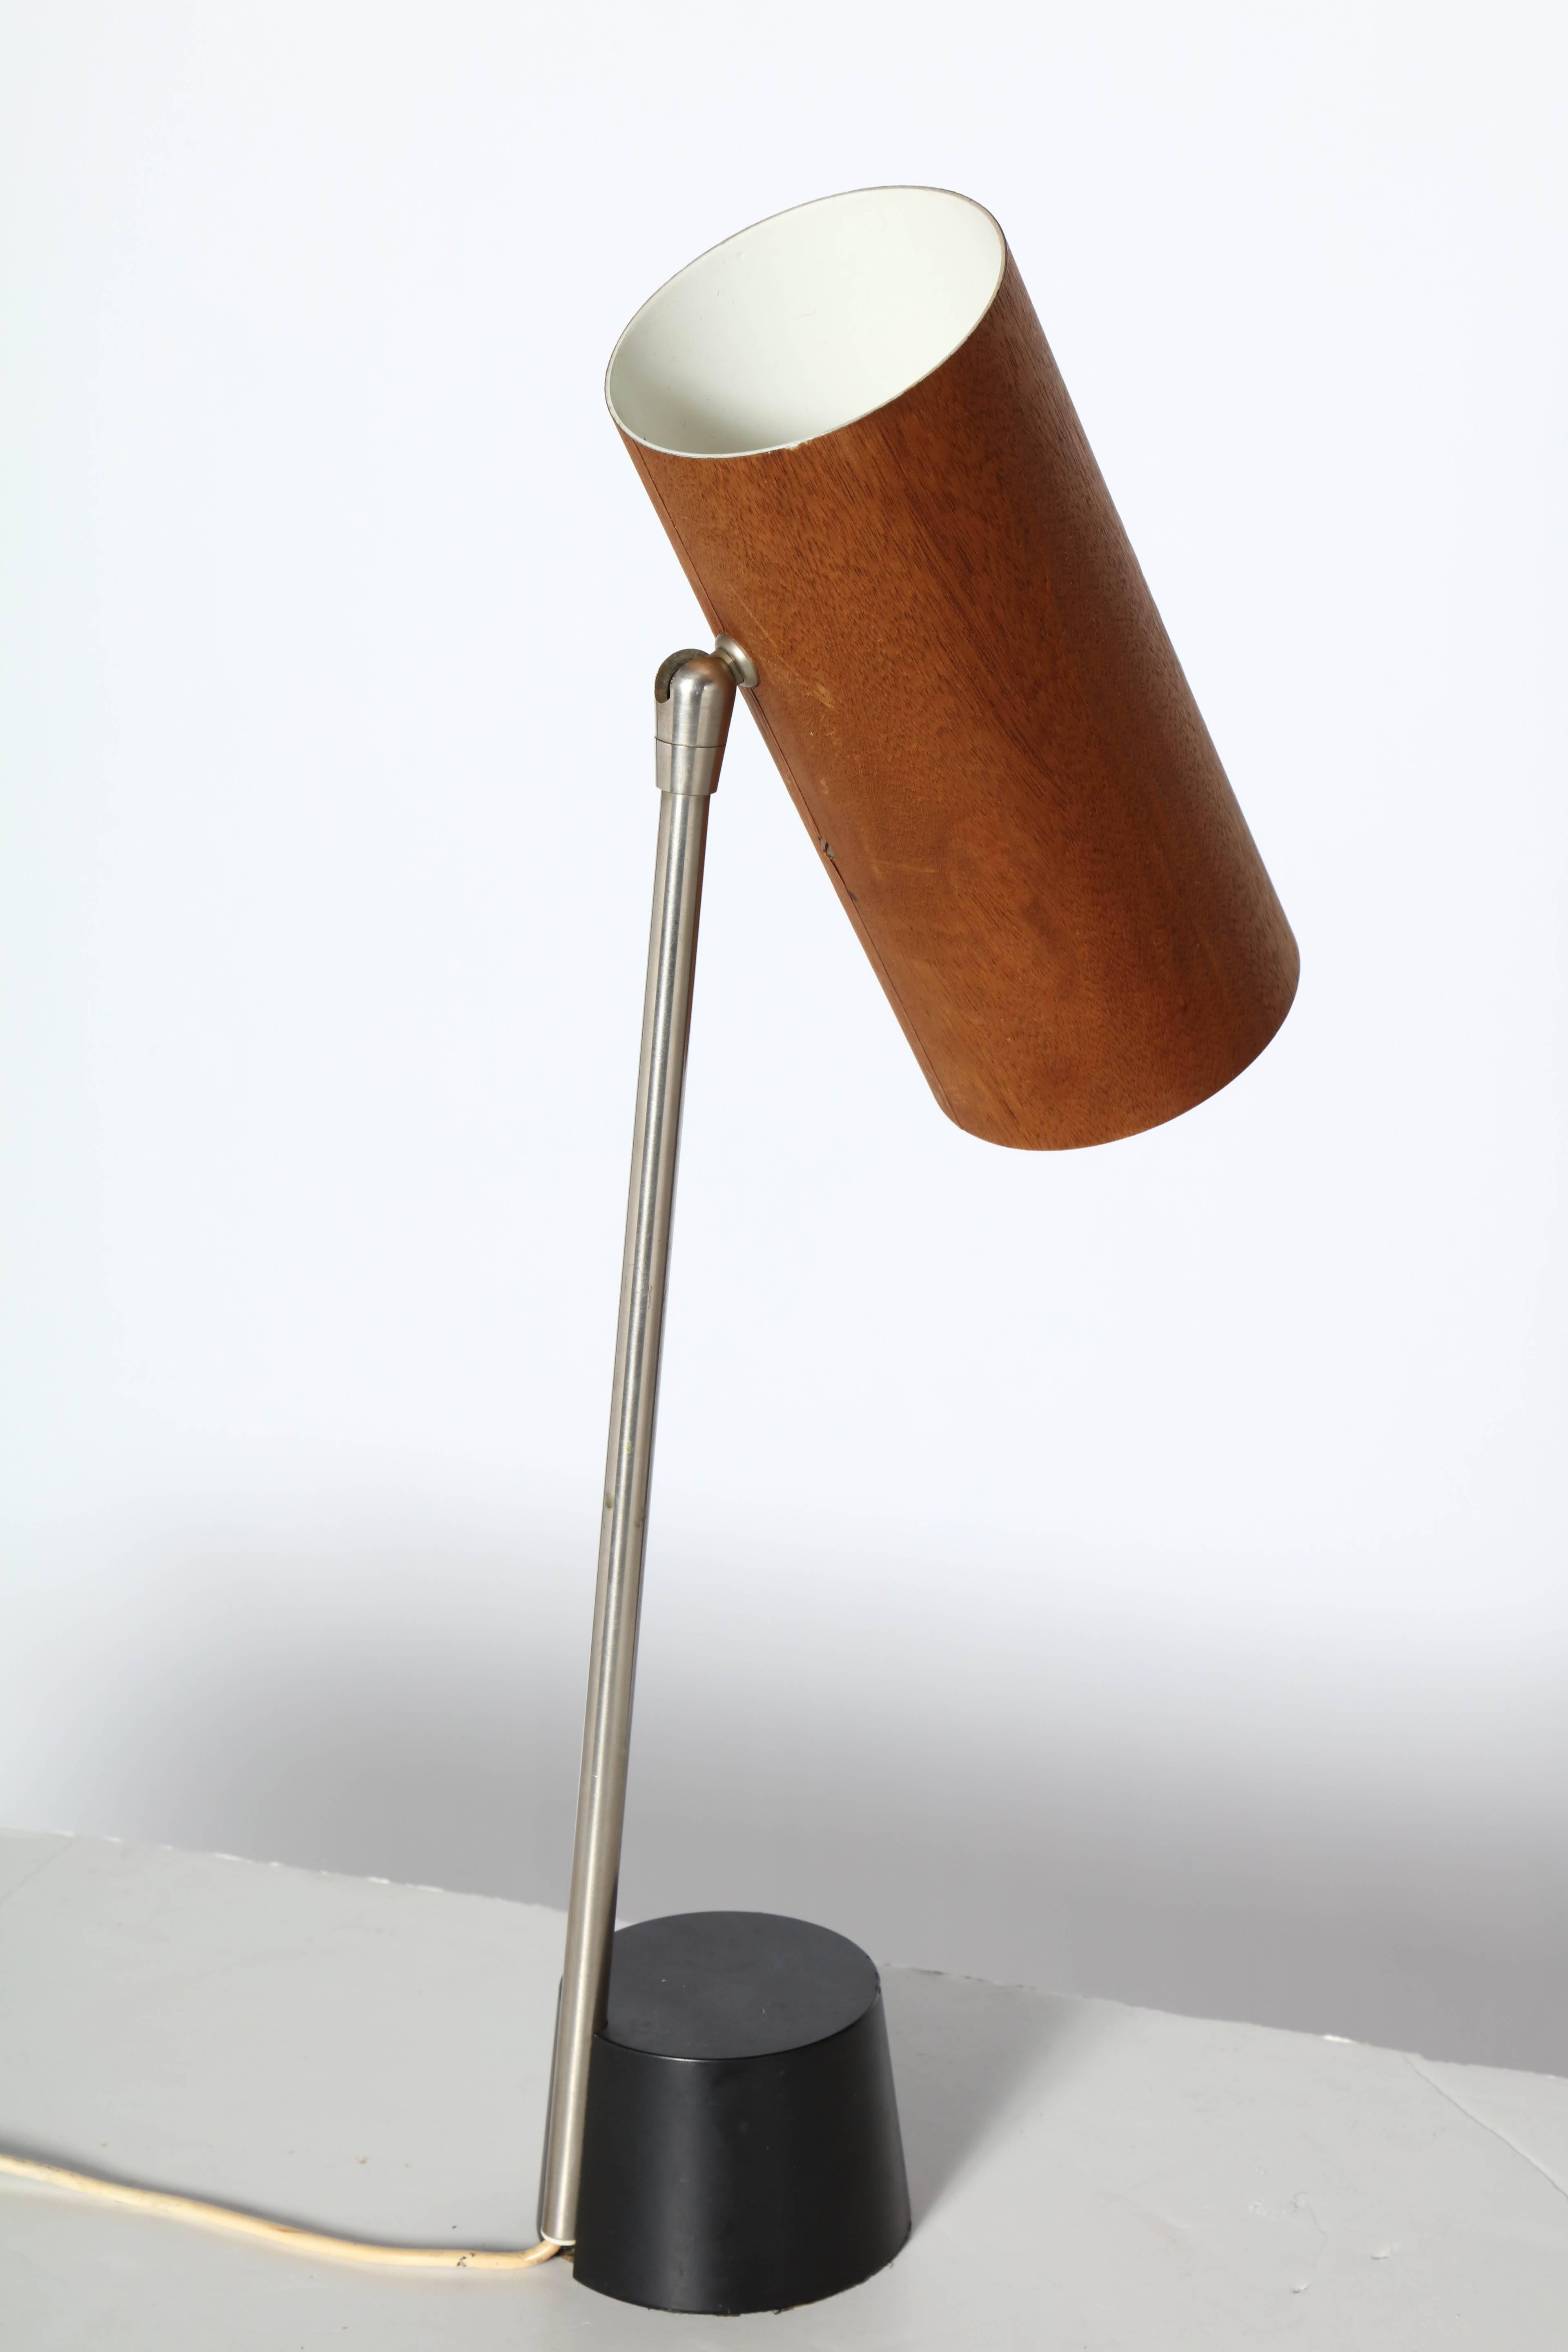 Metal George Nelson Holzzylinder Nickel Desk Lamp with Walnut Veneer Shade. Circa 1960